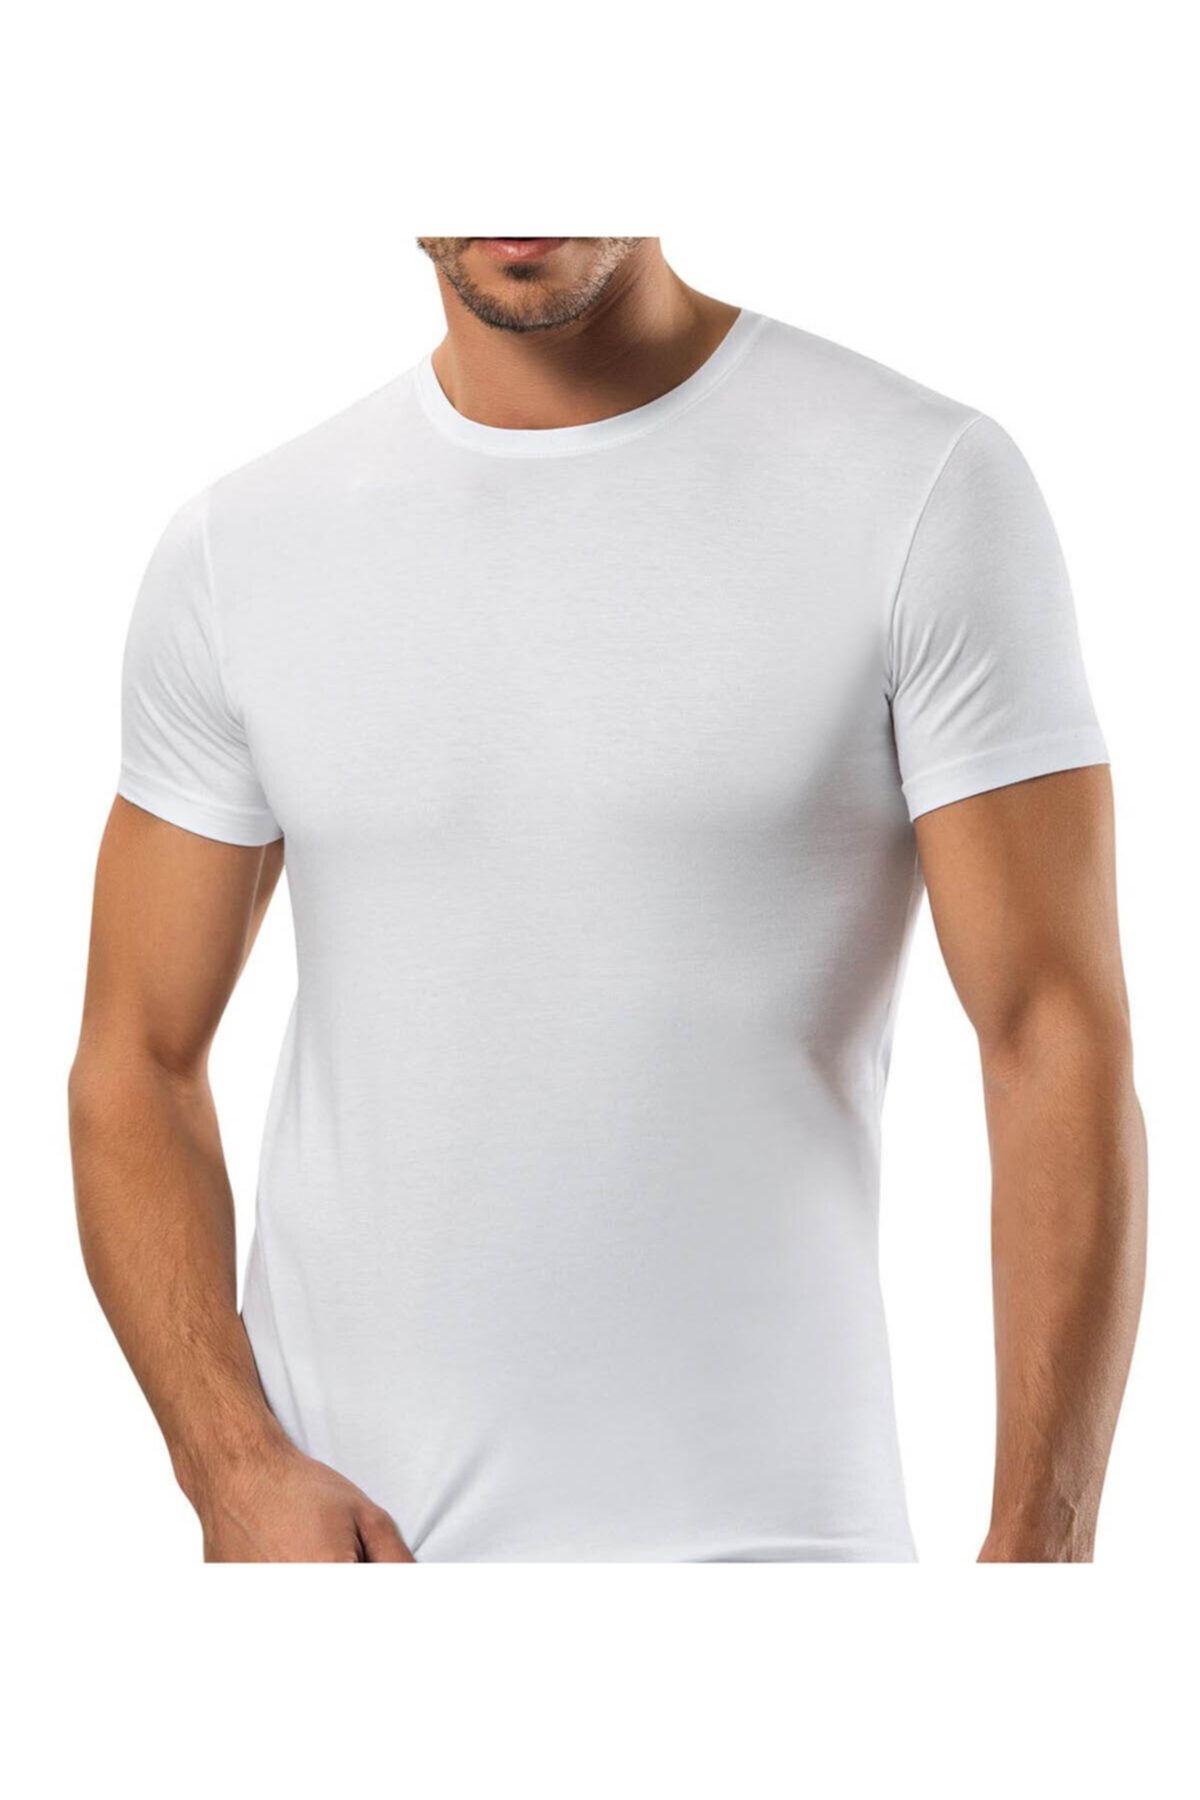 Erdem 6'lı 1122 Erkek Slim-fit T-shirt